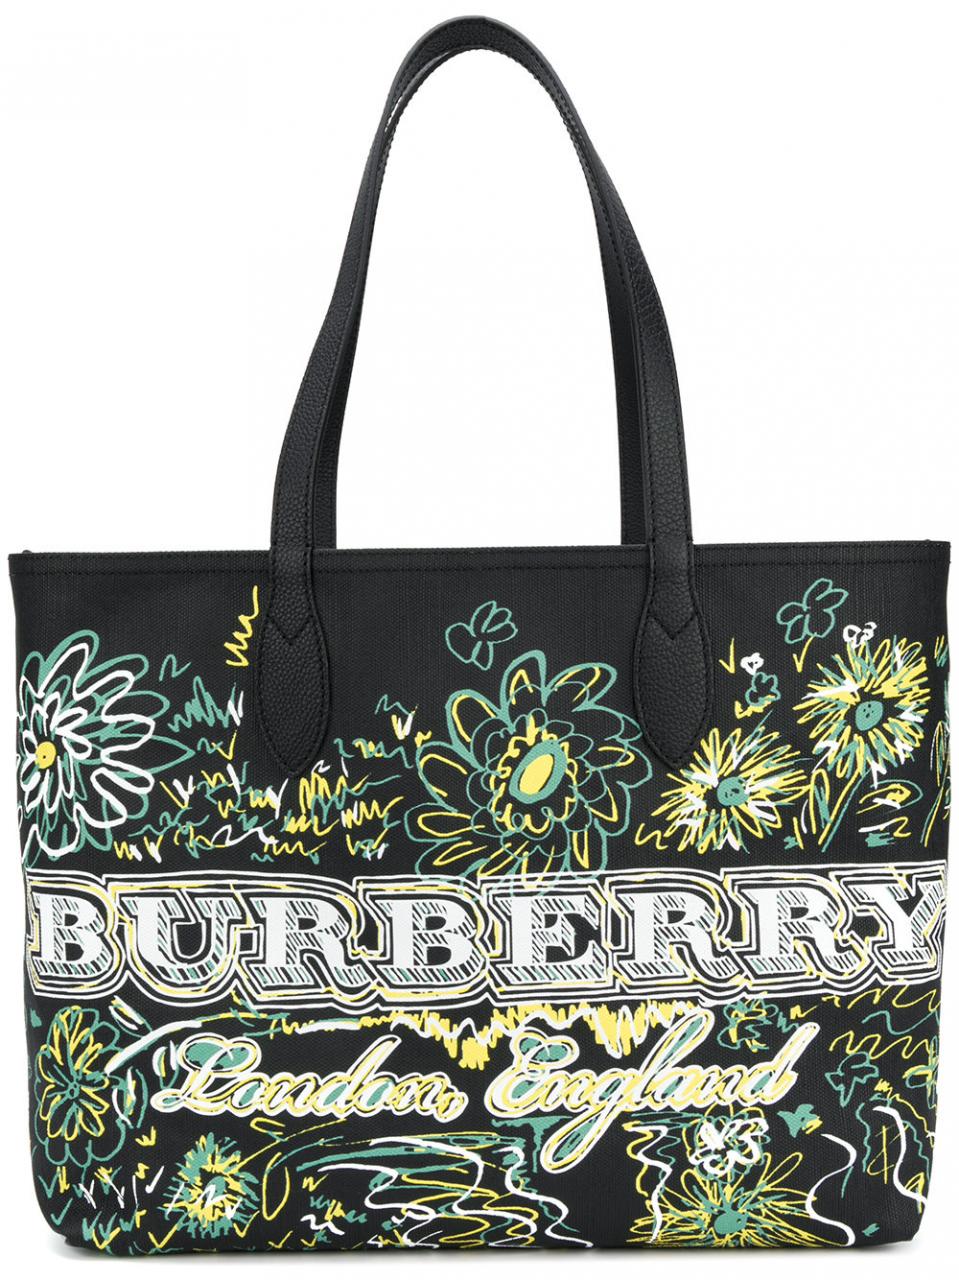 Farfetch網站最新額外8折優惠碼2018  Farfetch網購Burberry tote bag低至HK$2,200+直送港澳